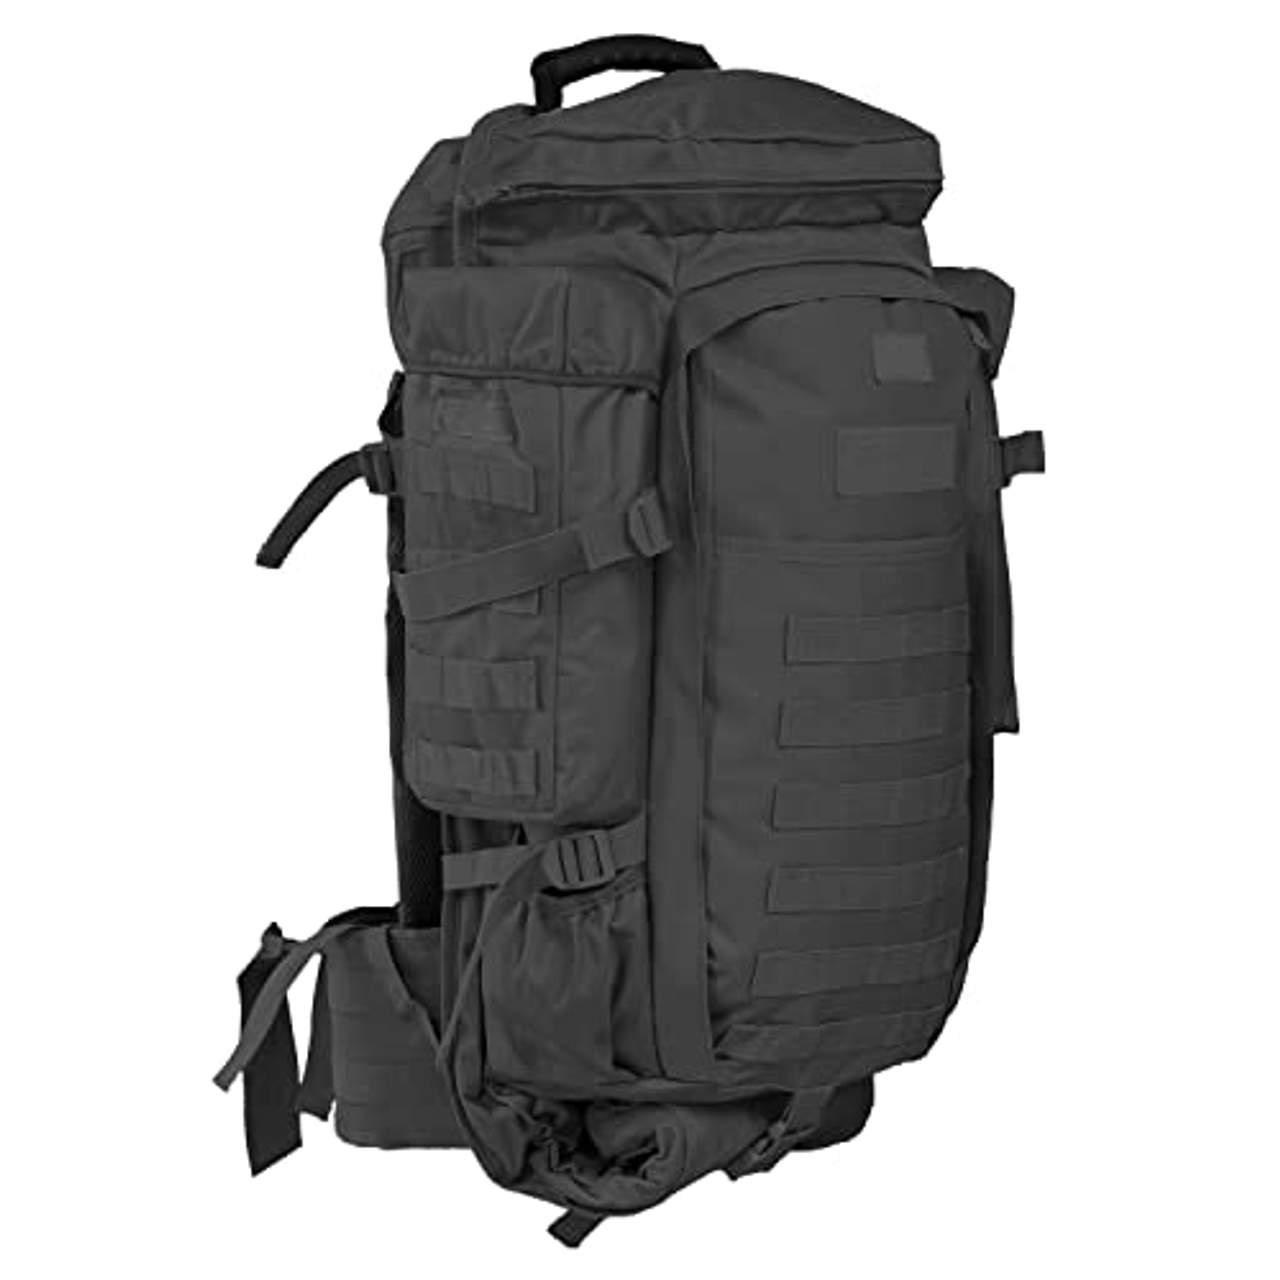 Gespann Tactical Rifle Bag Molle Hunting Backpack Military Rucksacks